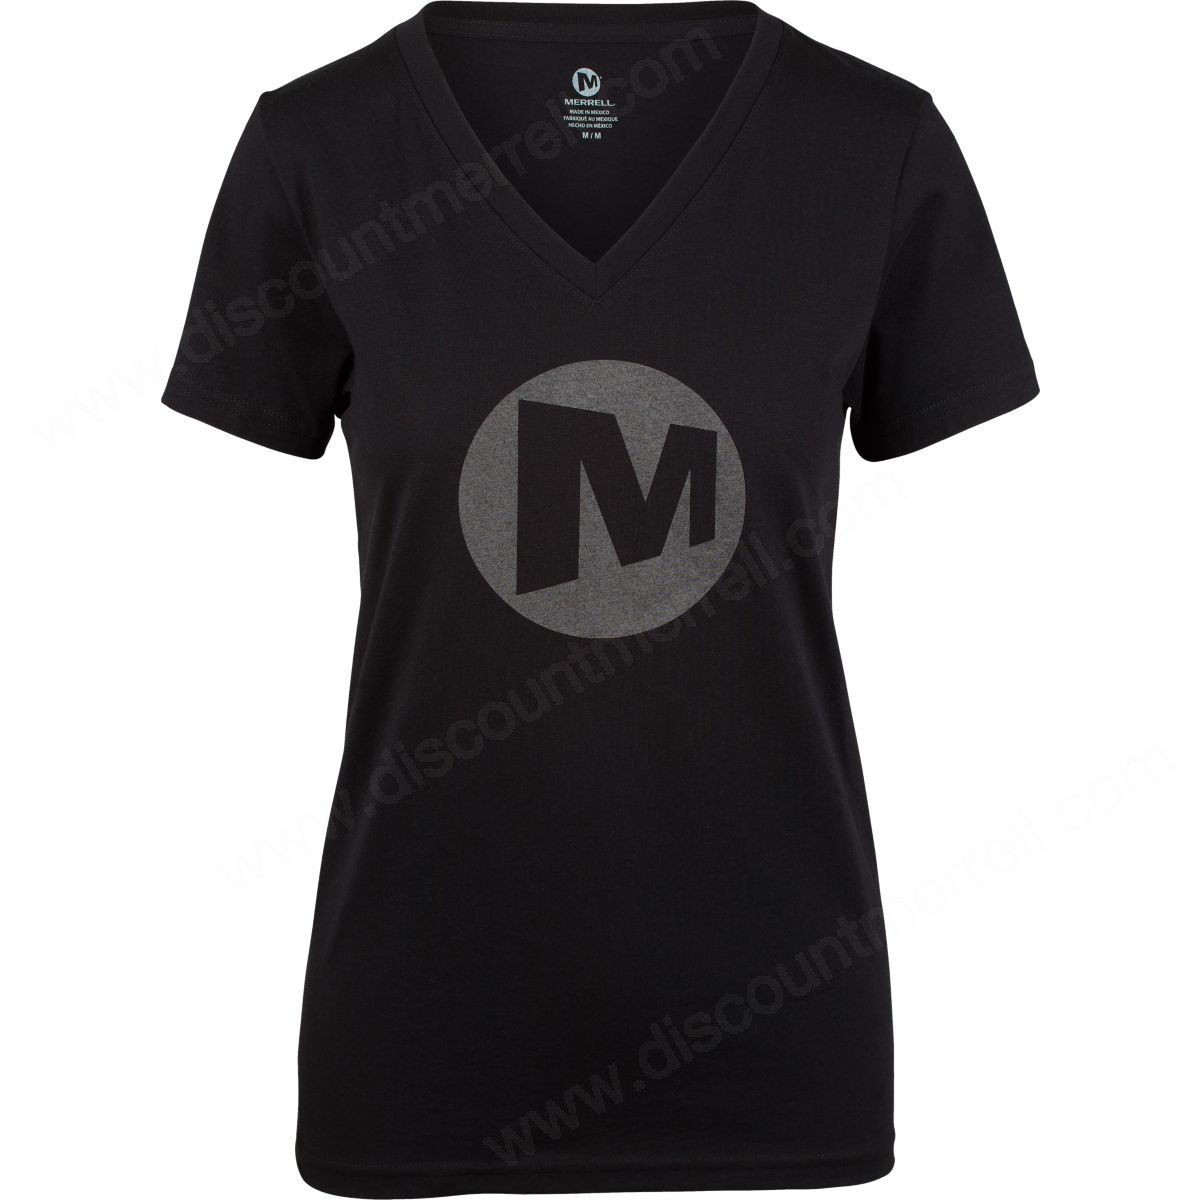 Merrell Woman's M Logo T-Shirts Black/reflective Grey/black - Merrell Woman's M Logo T-Shirts Black/reflective Grey/black